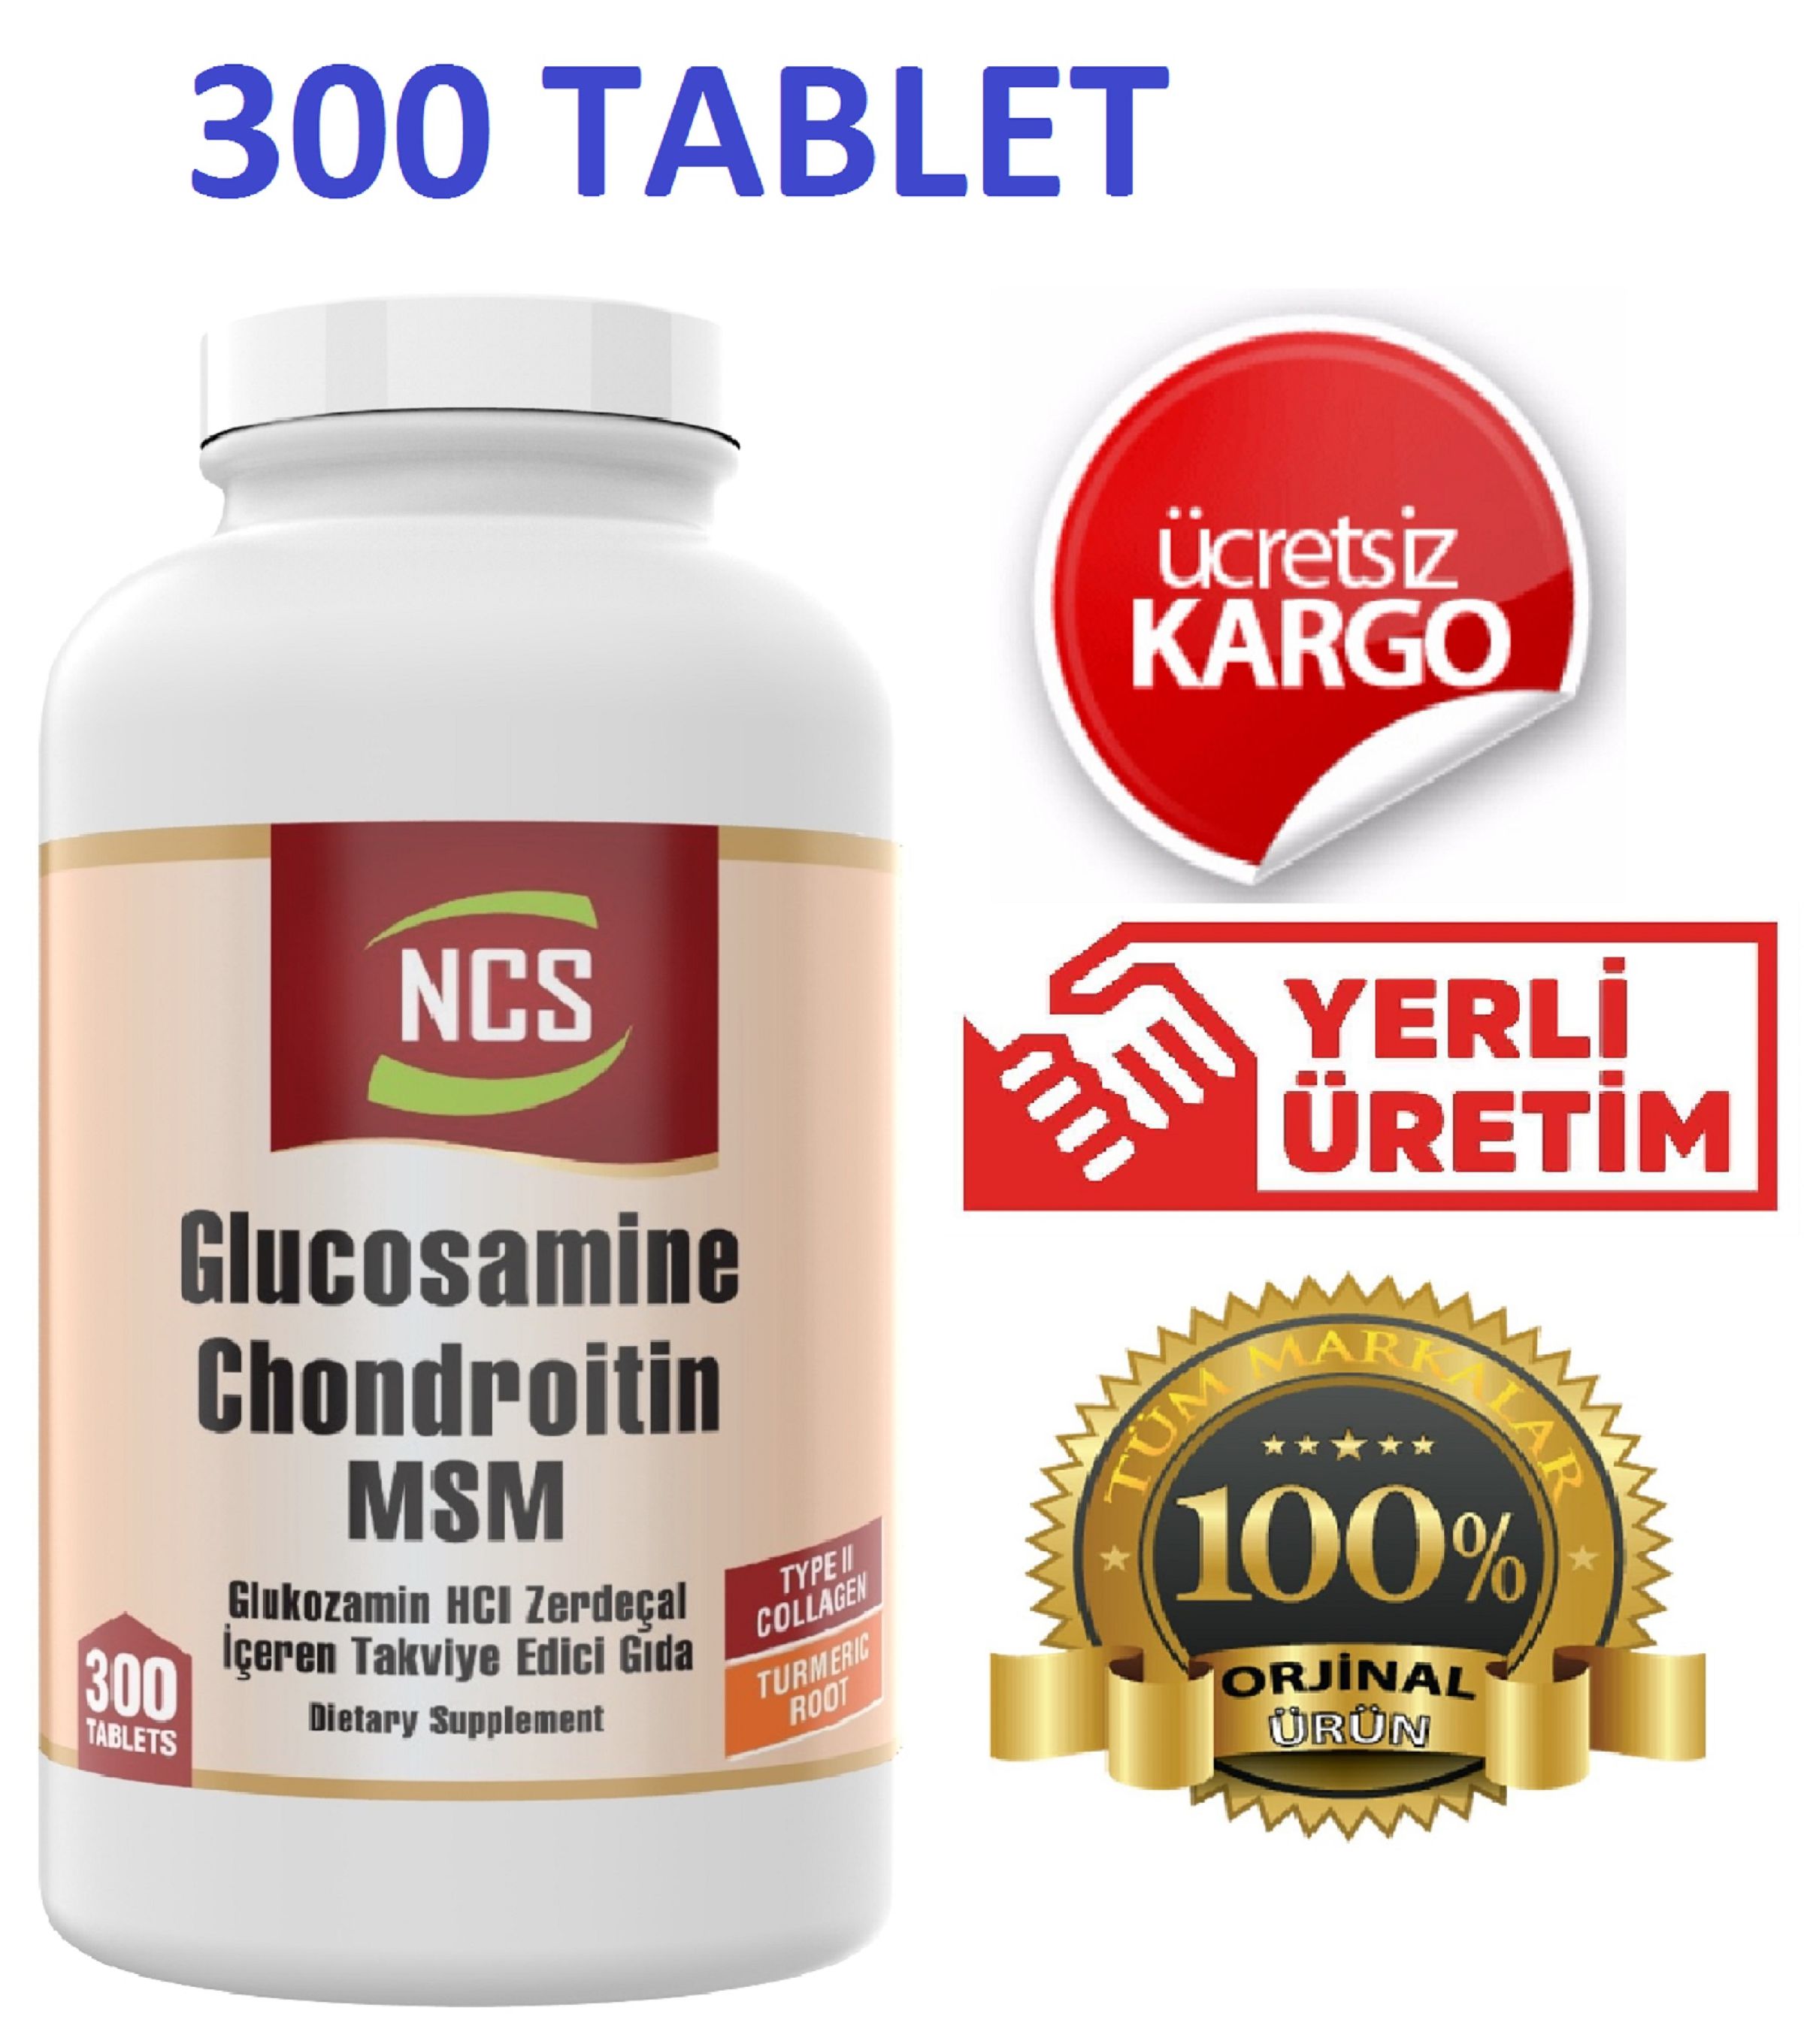 Ncs Glucosamine Chondroitin Msm 300 Tablet Curcumin ve Colla